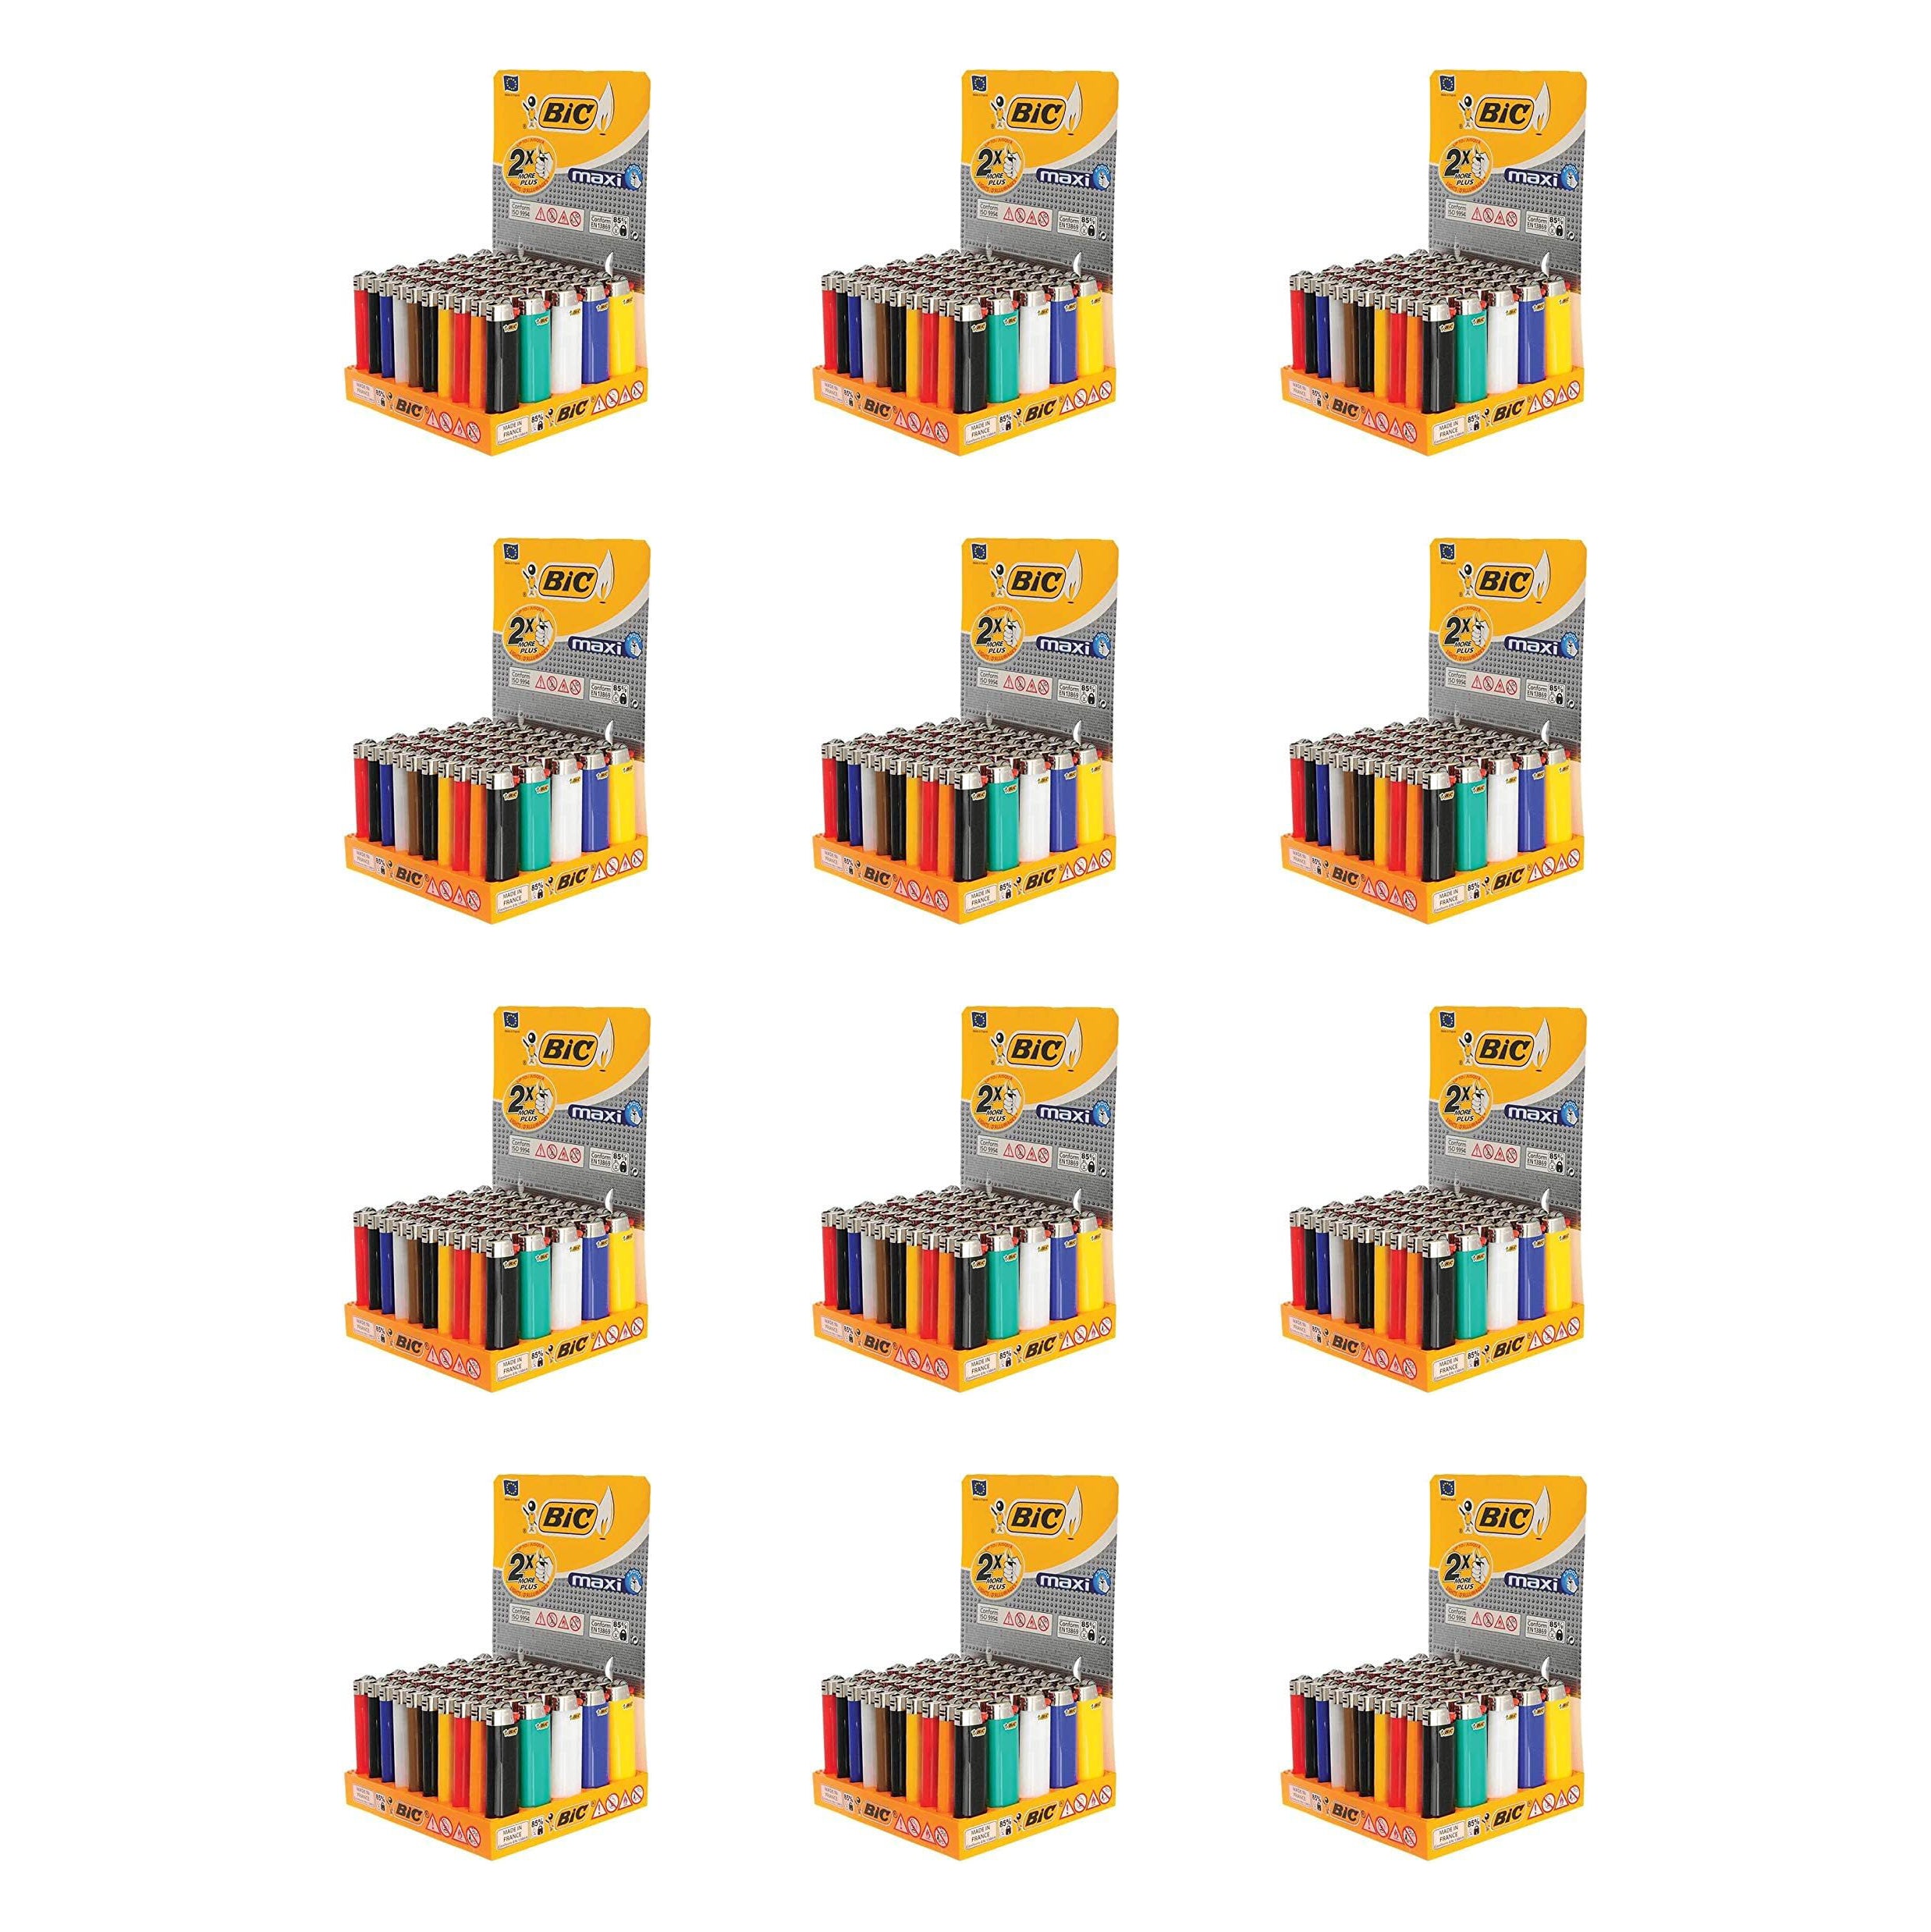 Box of 50 BIC Maxi lighters